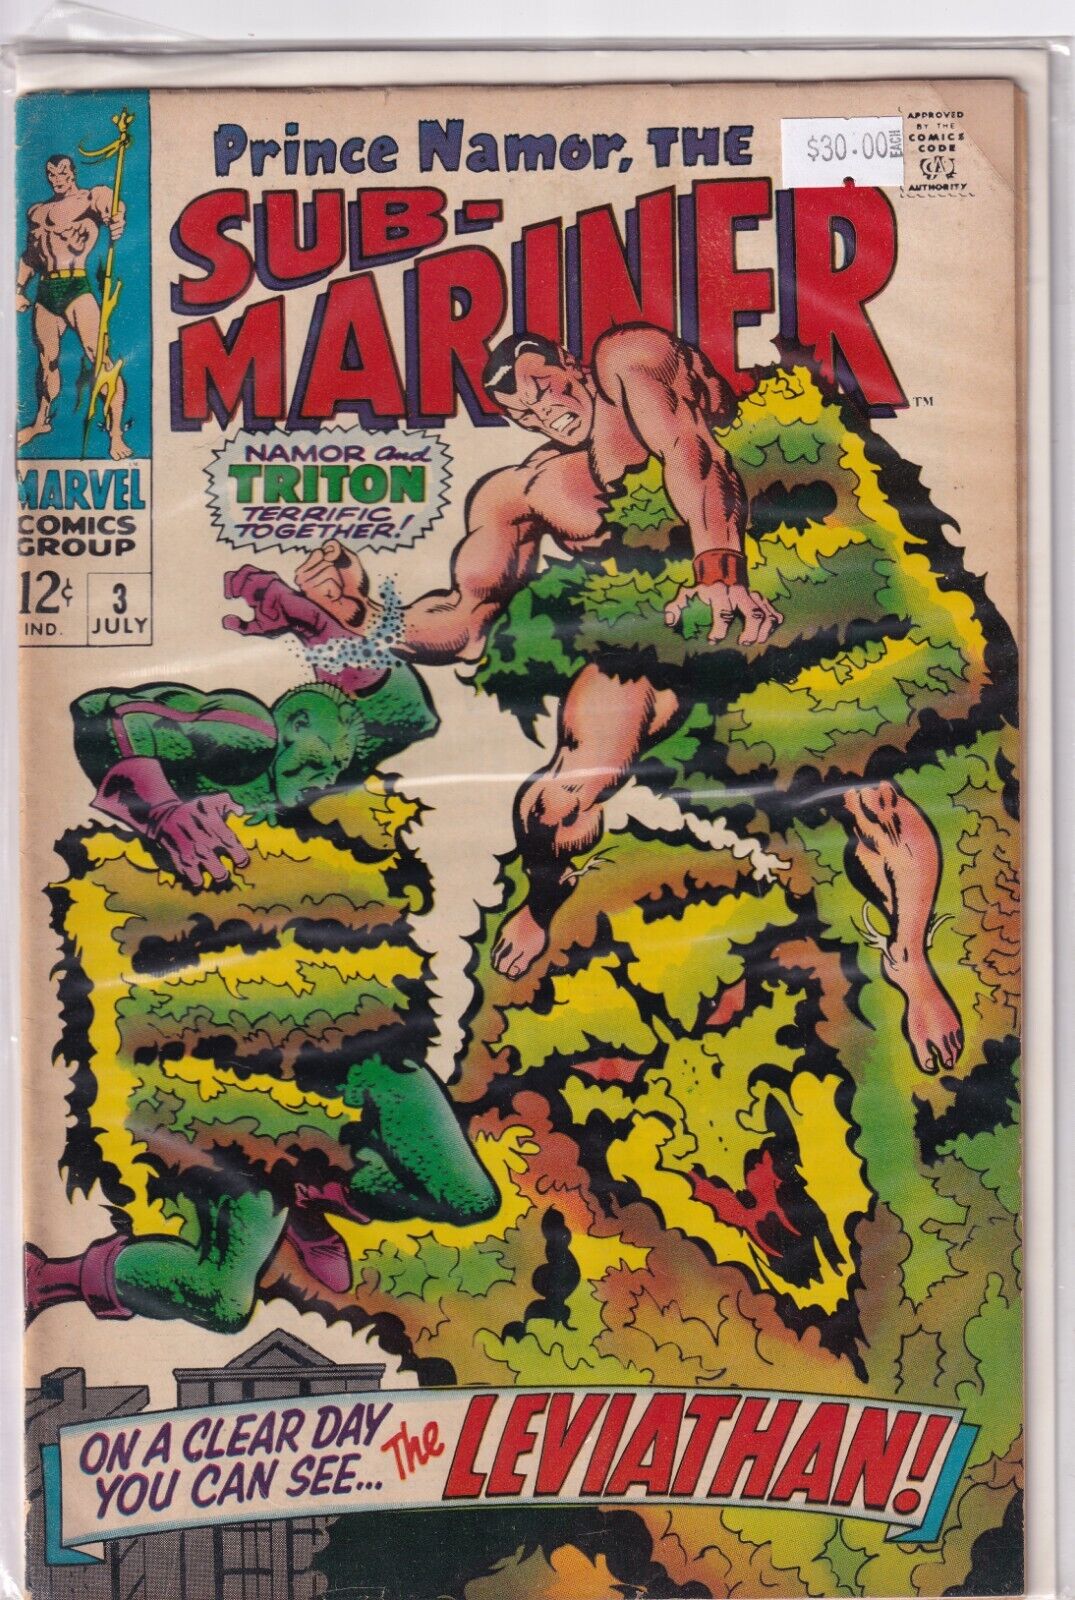 Prince Namor The Sub-Mariner #3 Marvel Comics Group (1968) The Leviathan